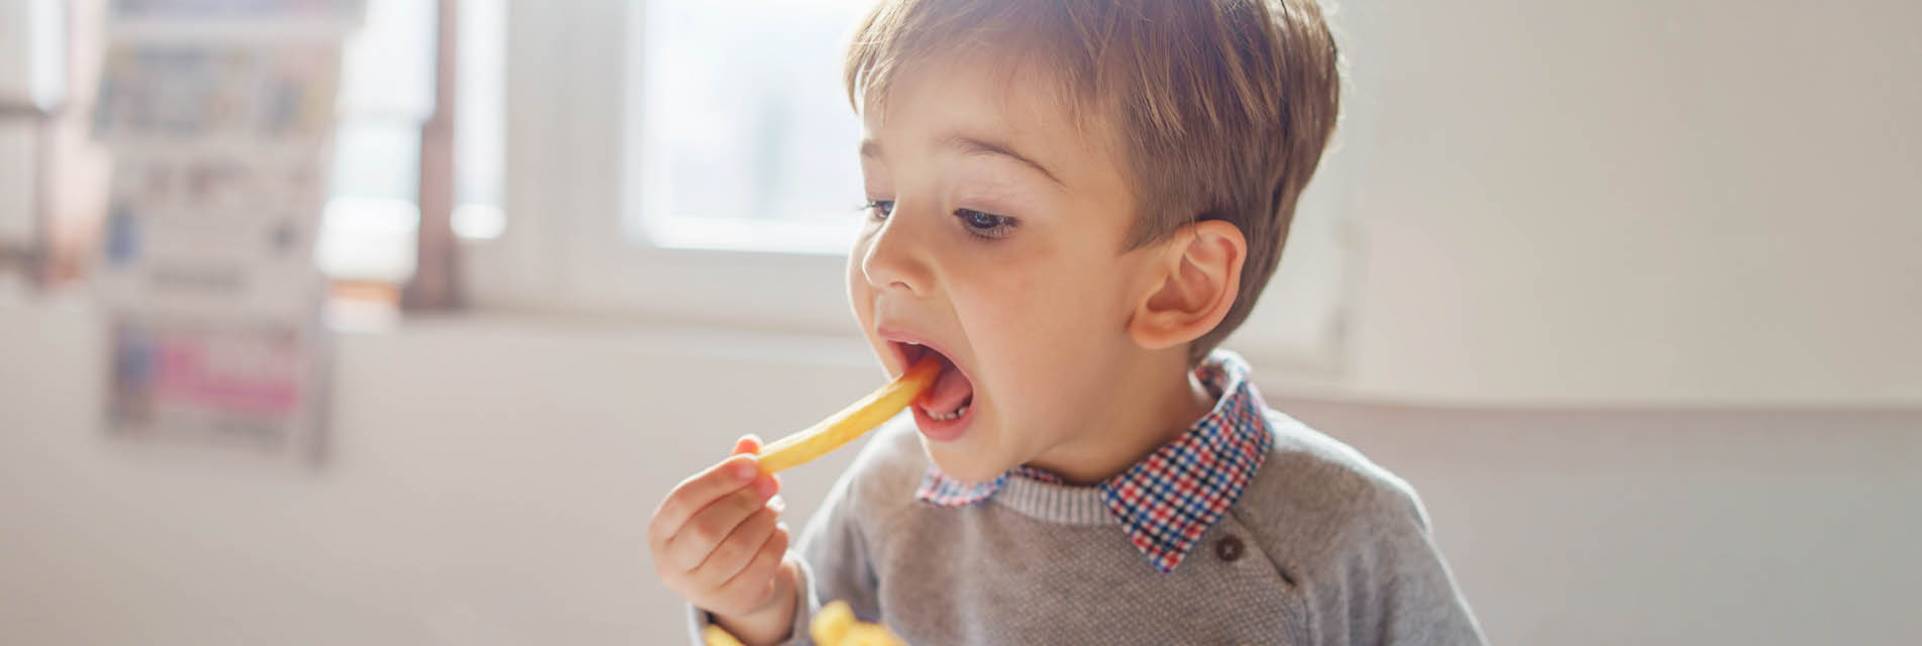 La falta de apetito en los niños